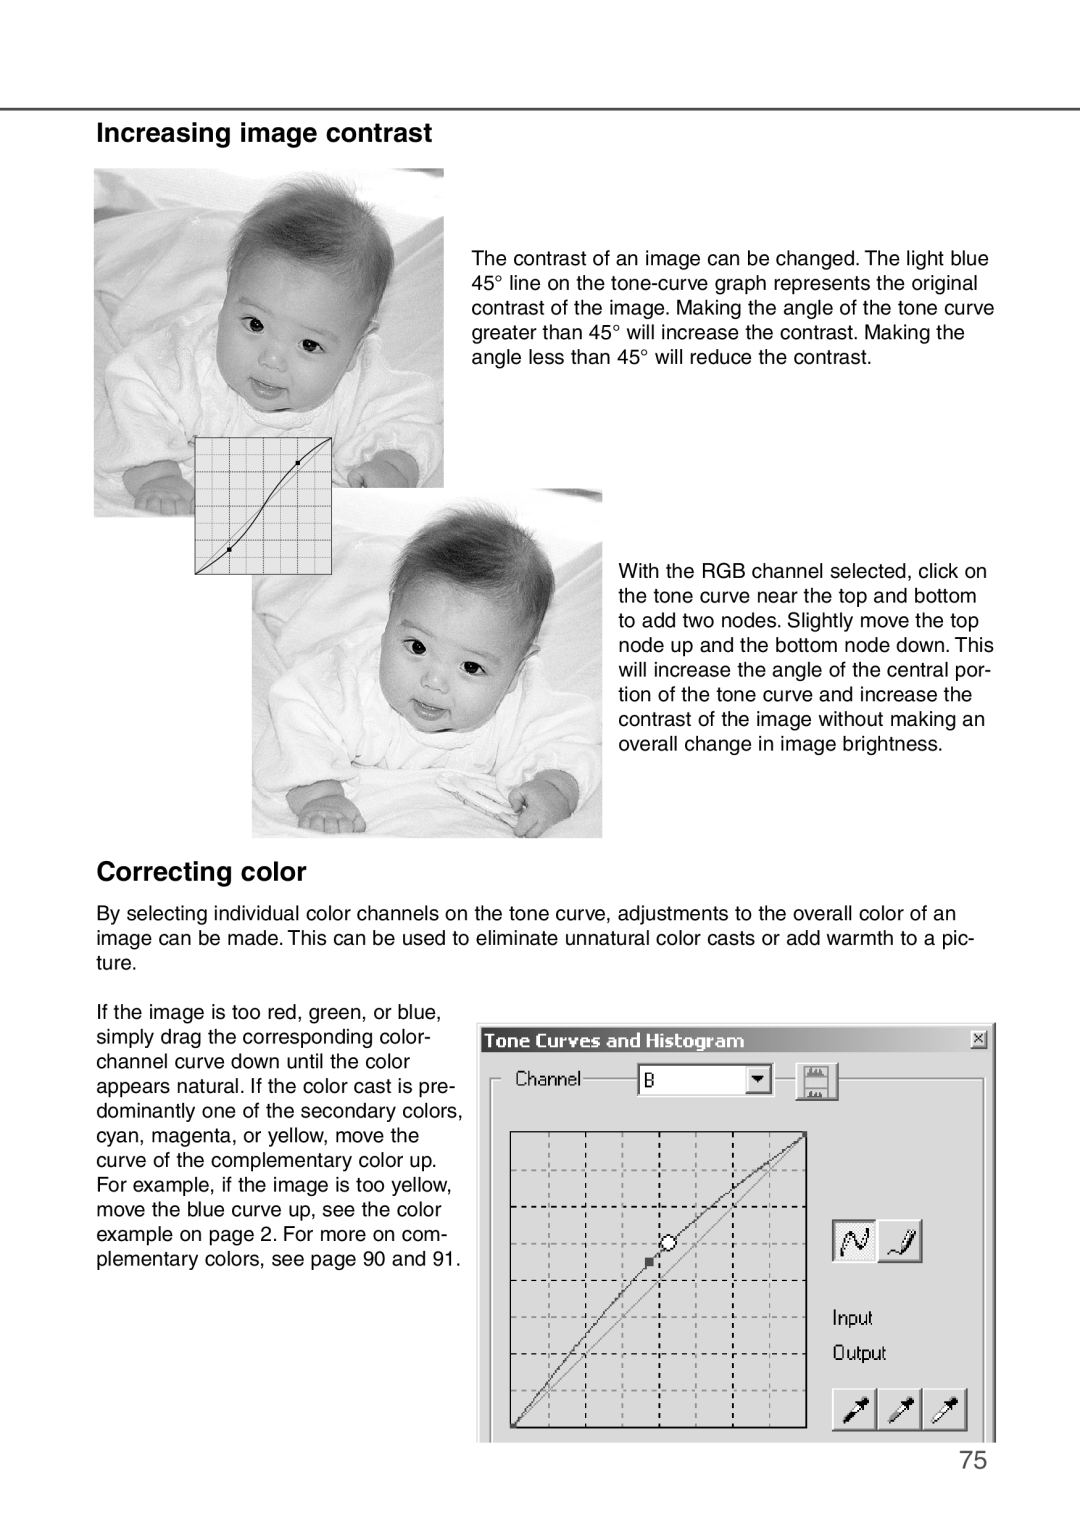 Konica Minolta AF-2840 instruction manual Increasing image contrast, Correcting color 